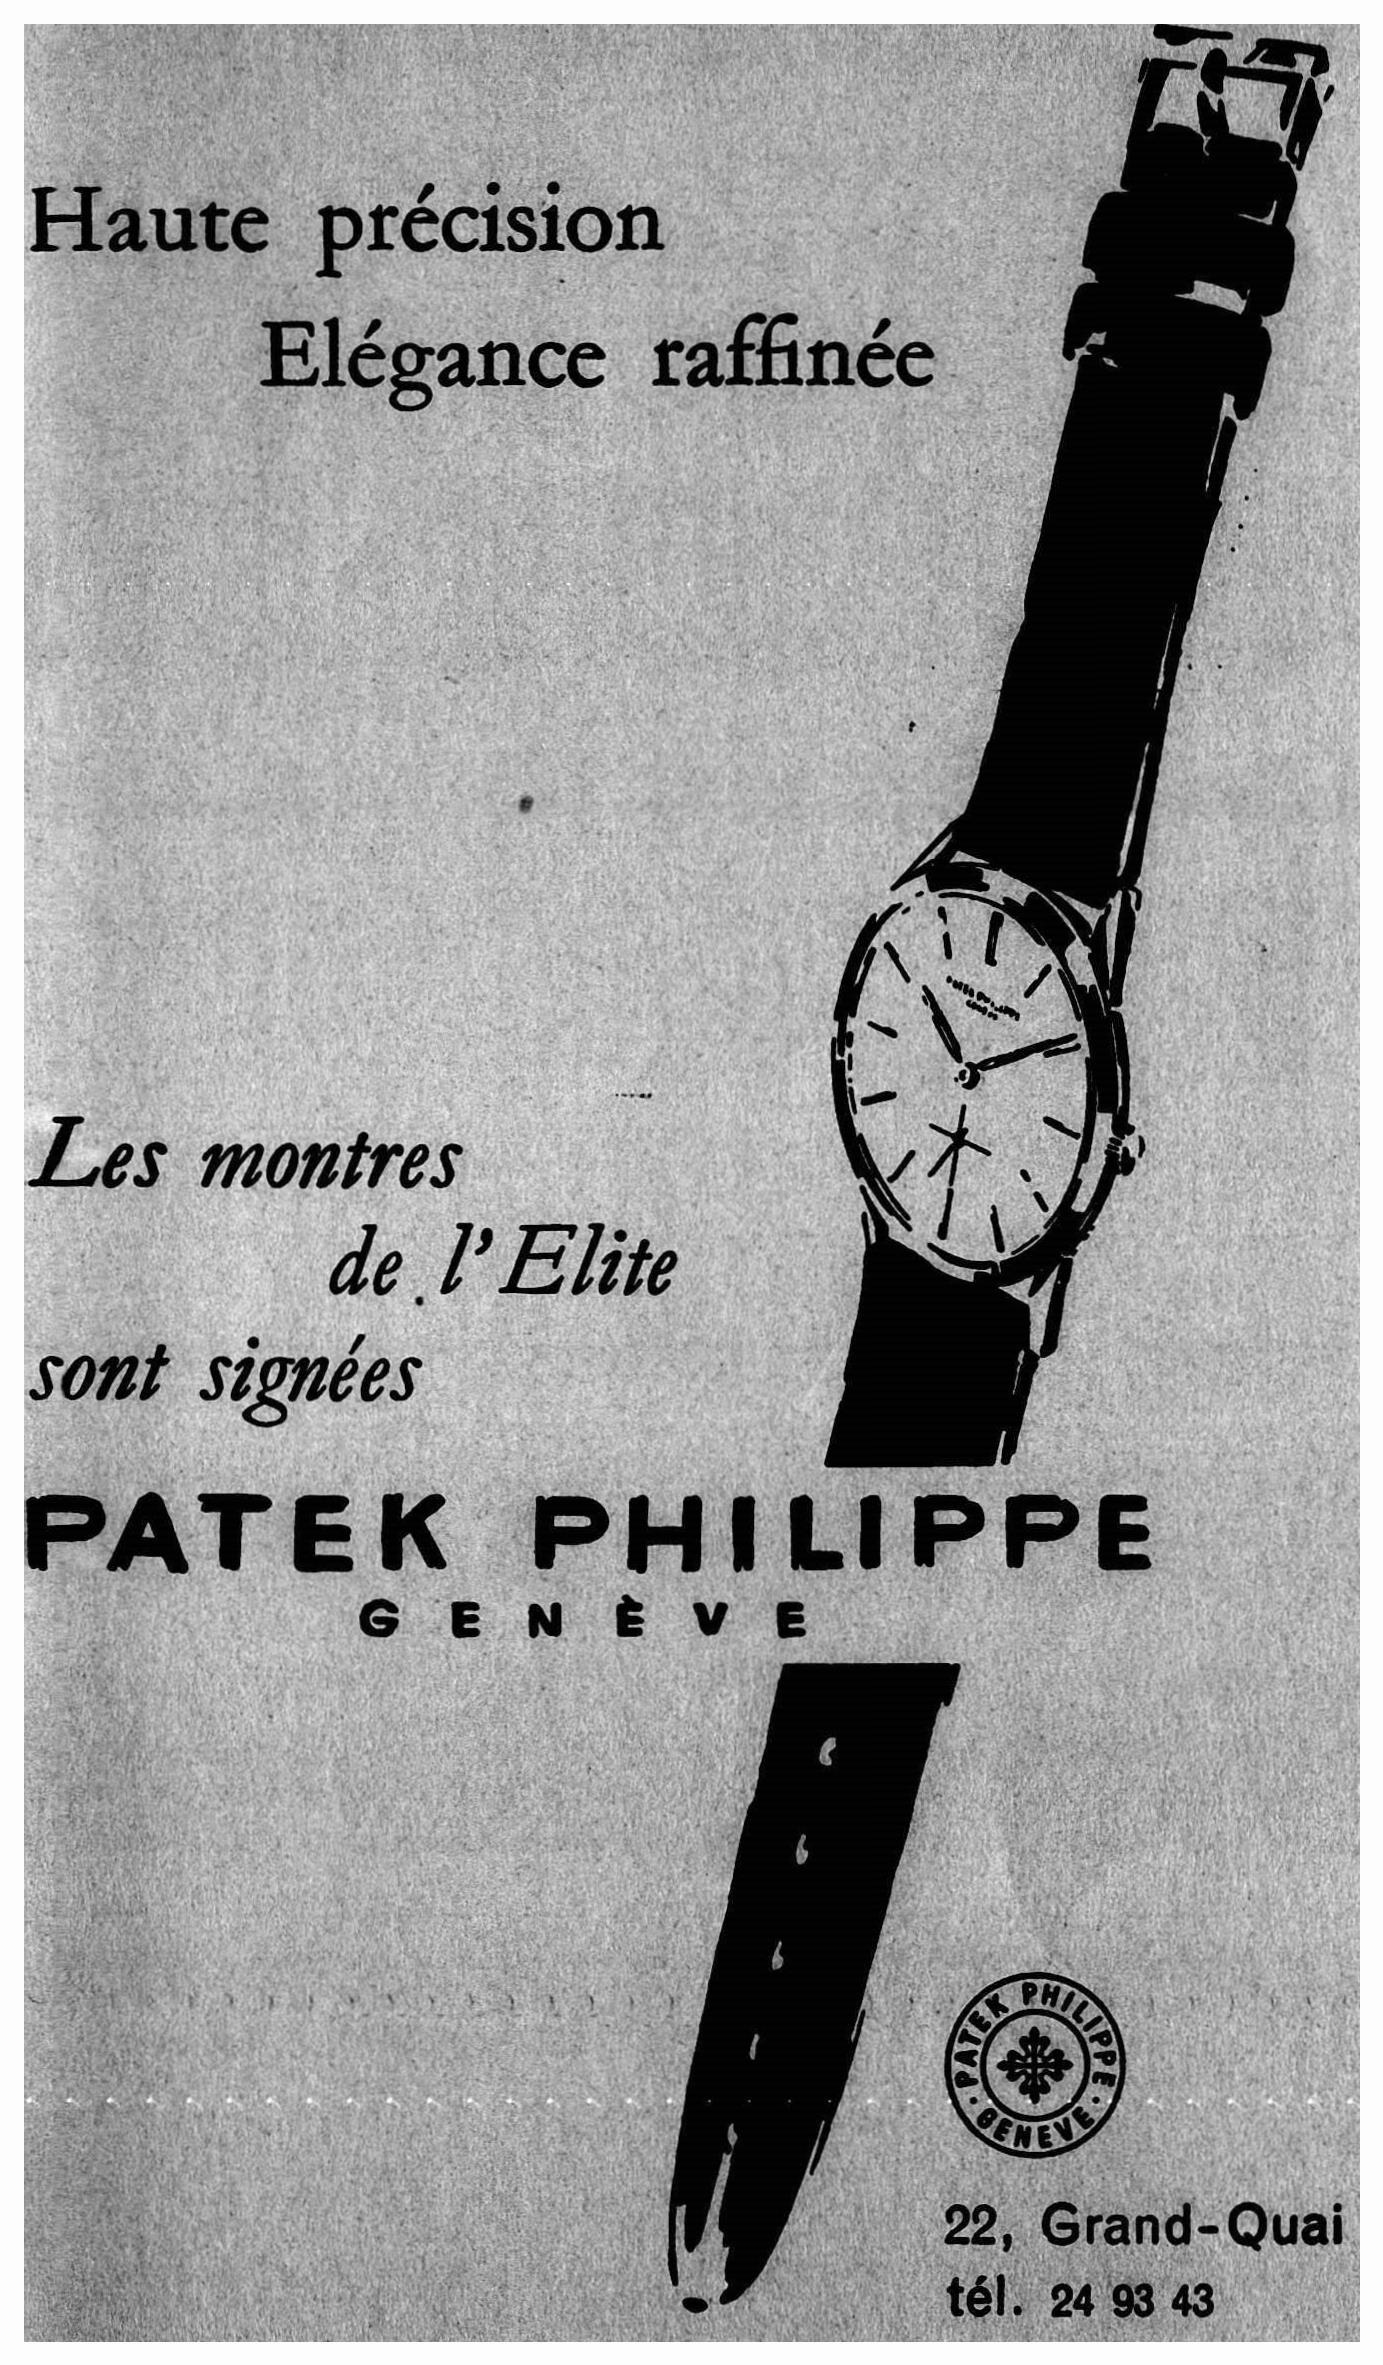 Patek Philippe 1962 197.jpg